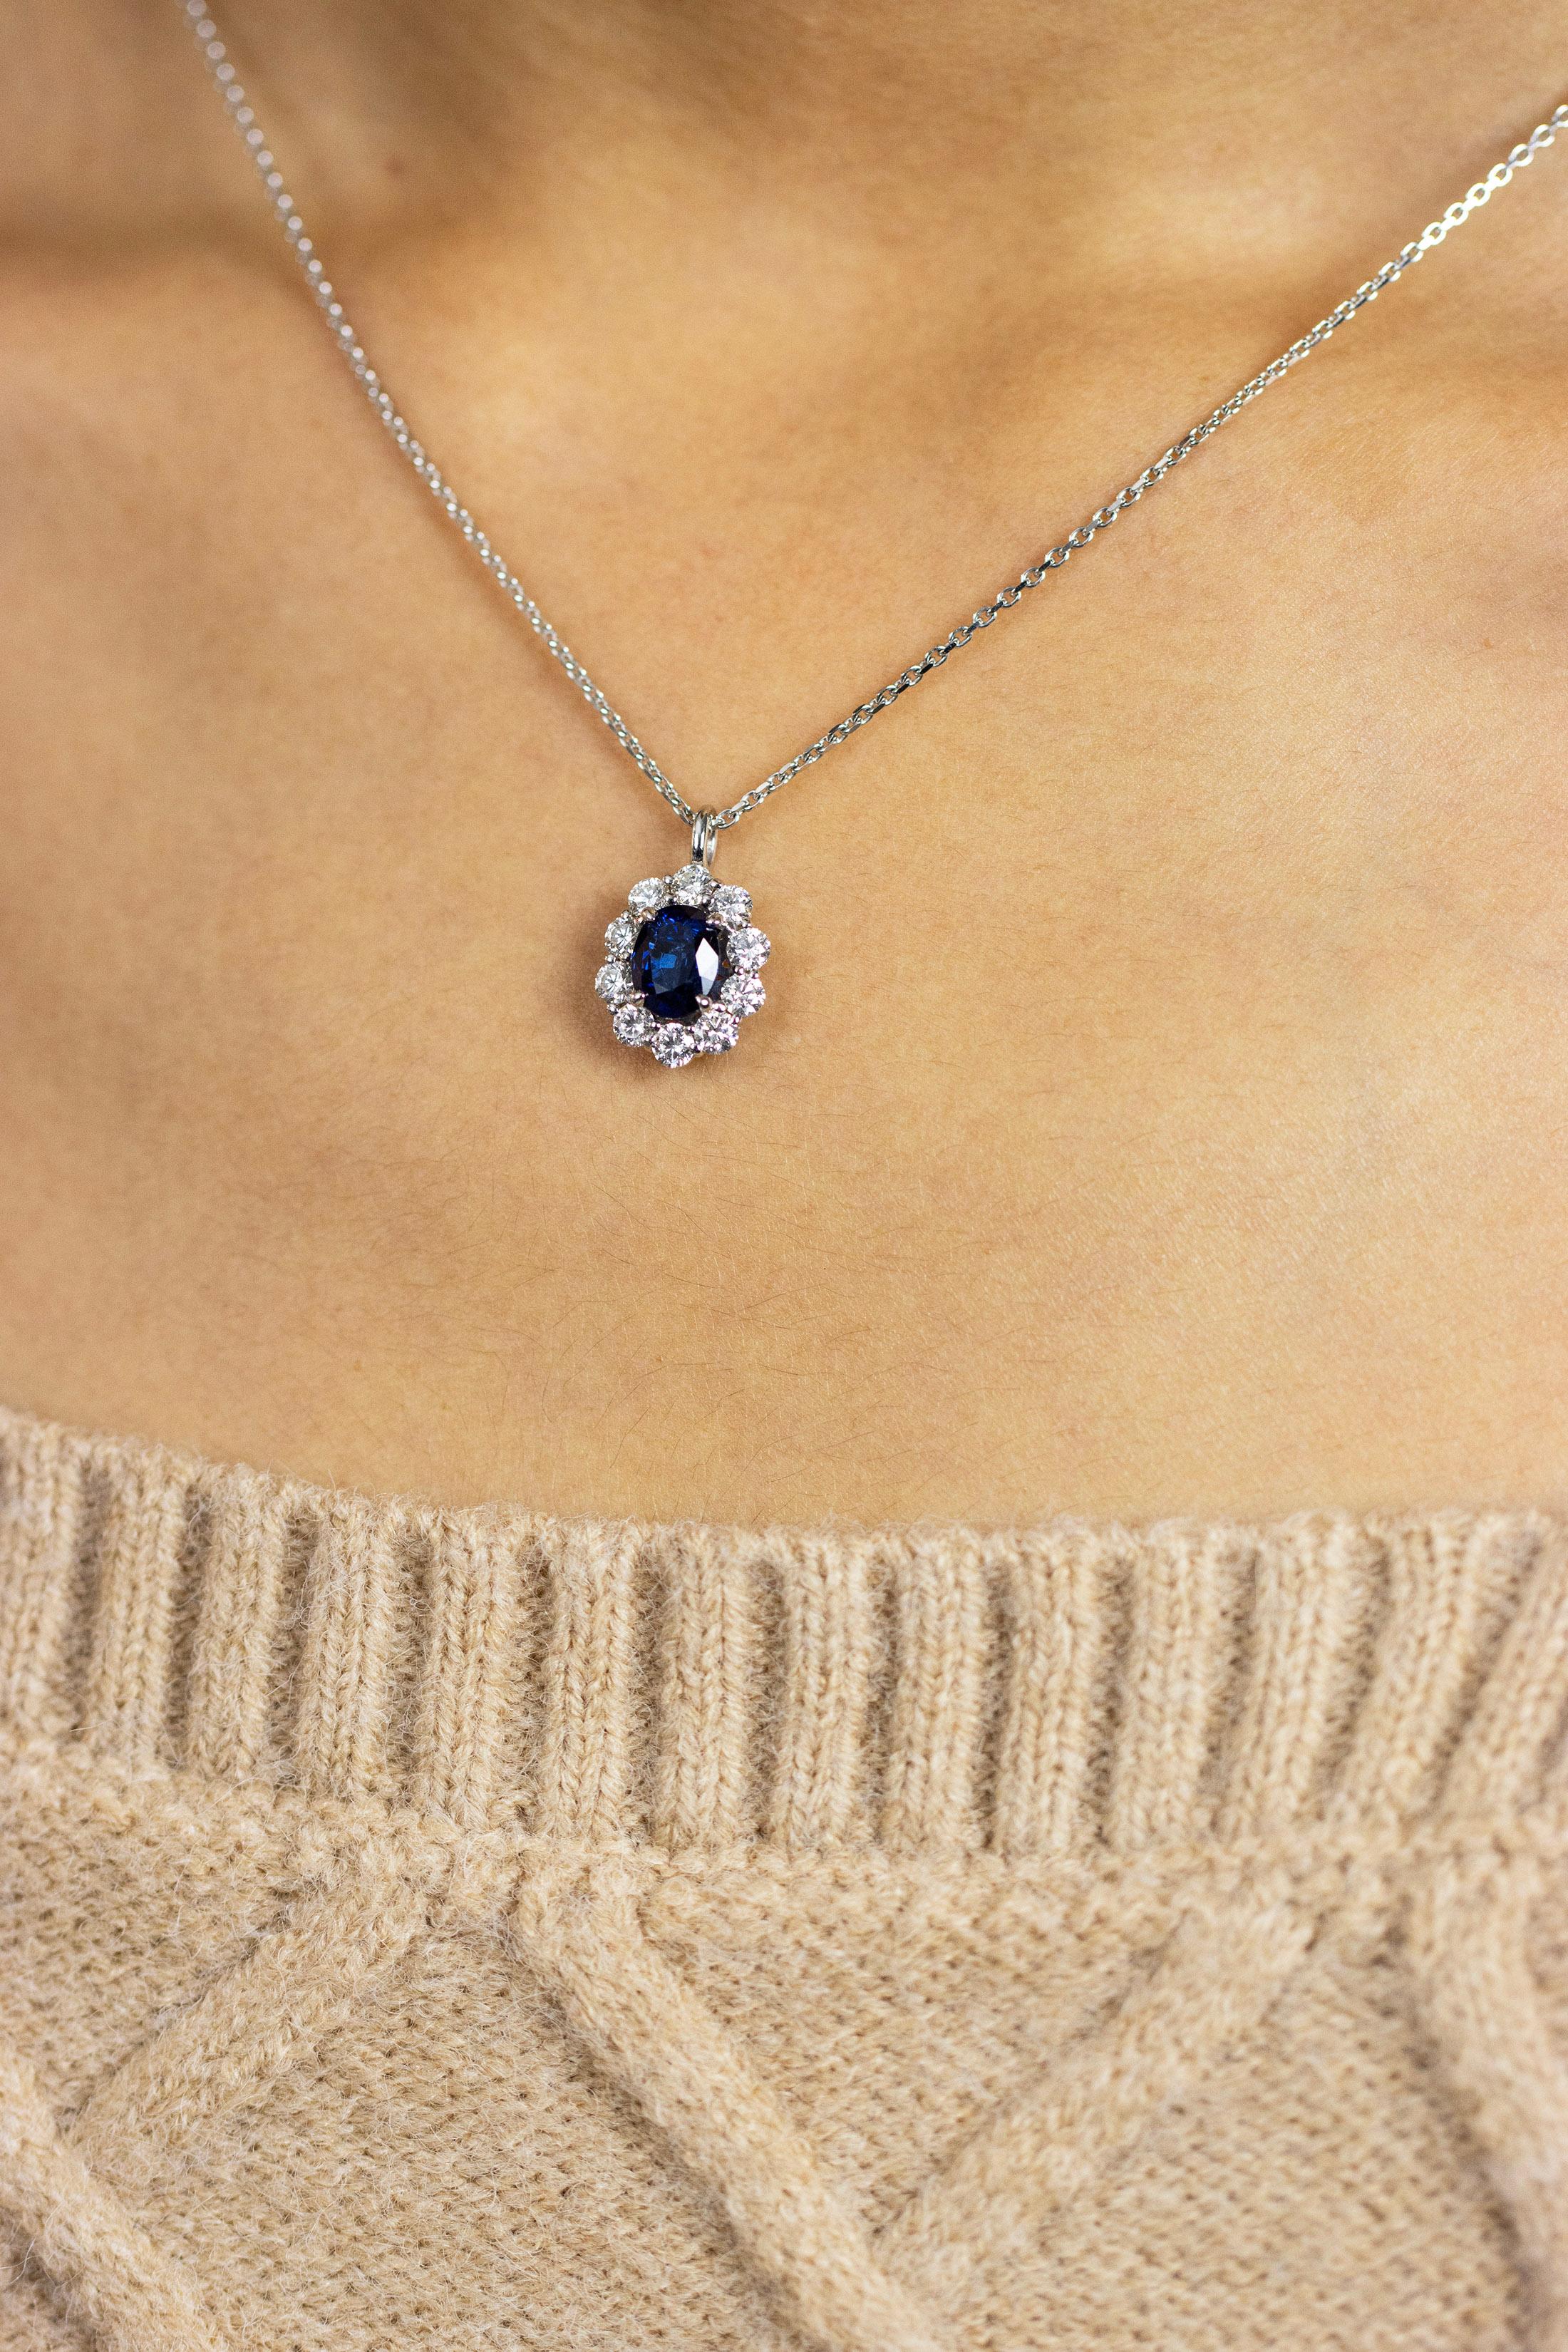 Oval Cut Roman Malakov 1.82 Carat Oval Blue Sapphire with Diamond Halo Pendant Necklace For Sale